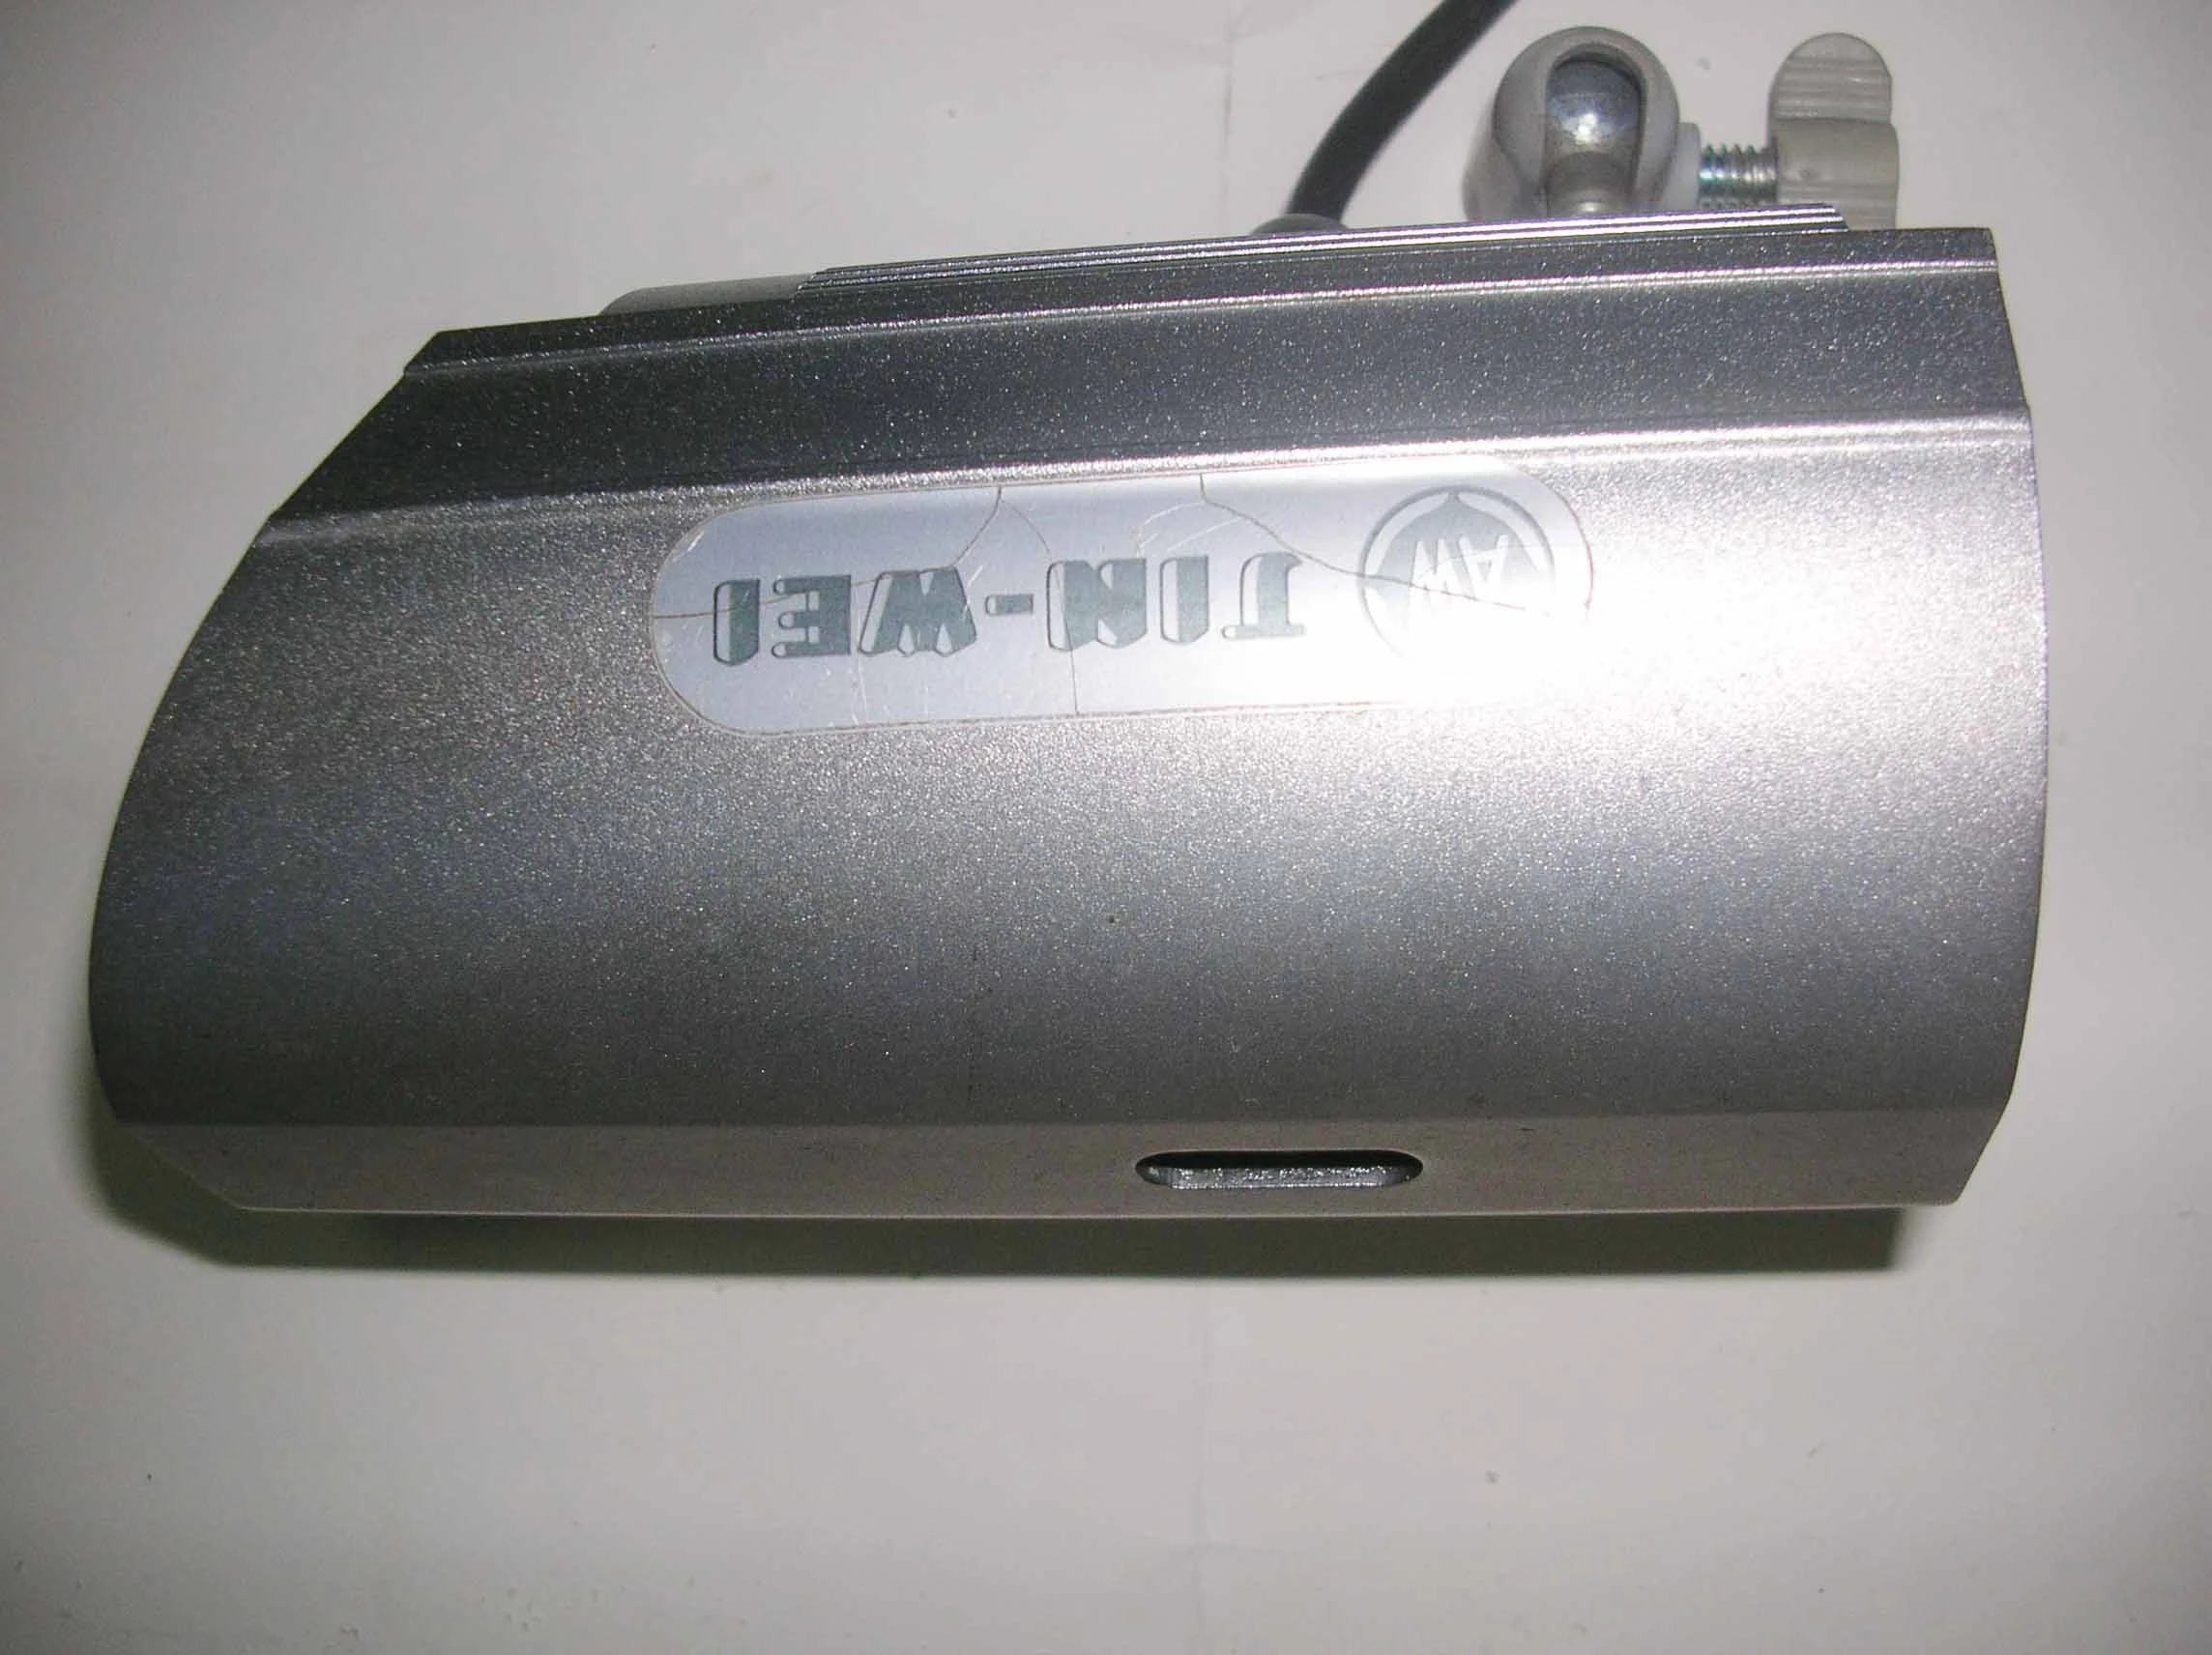 SONY紅外線防水攝影機12顆LED 30米